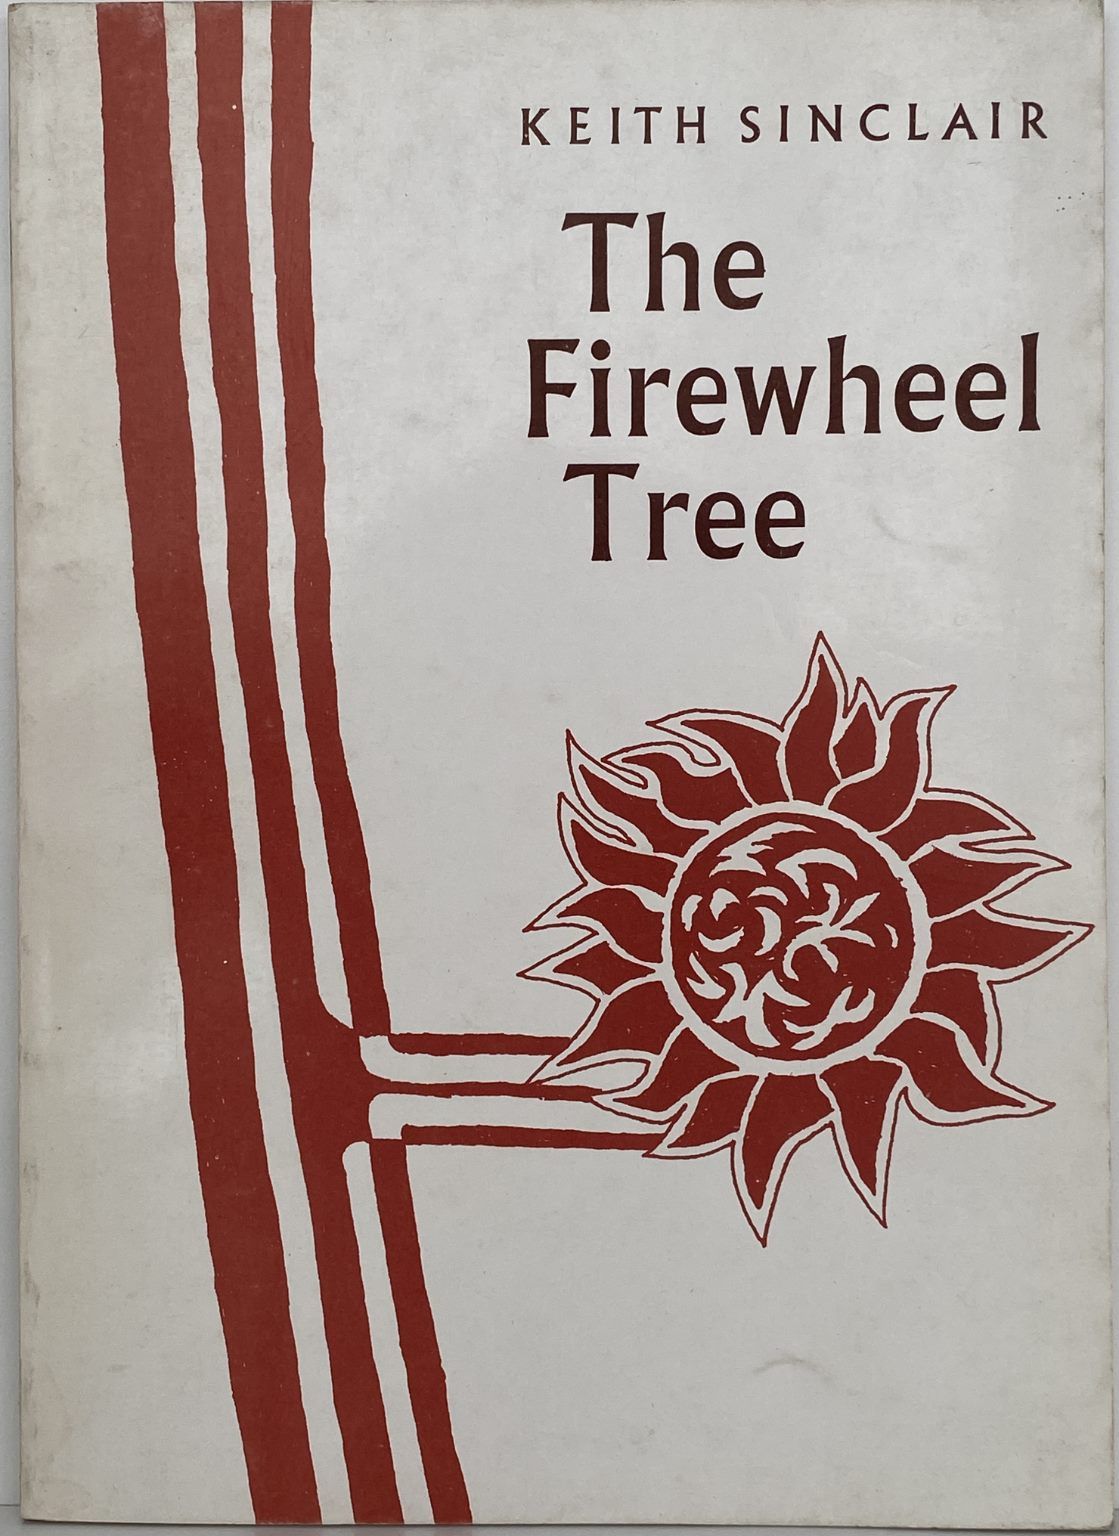 THE FIREWHEEL TREE